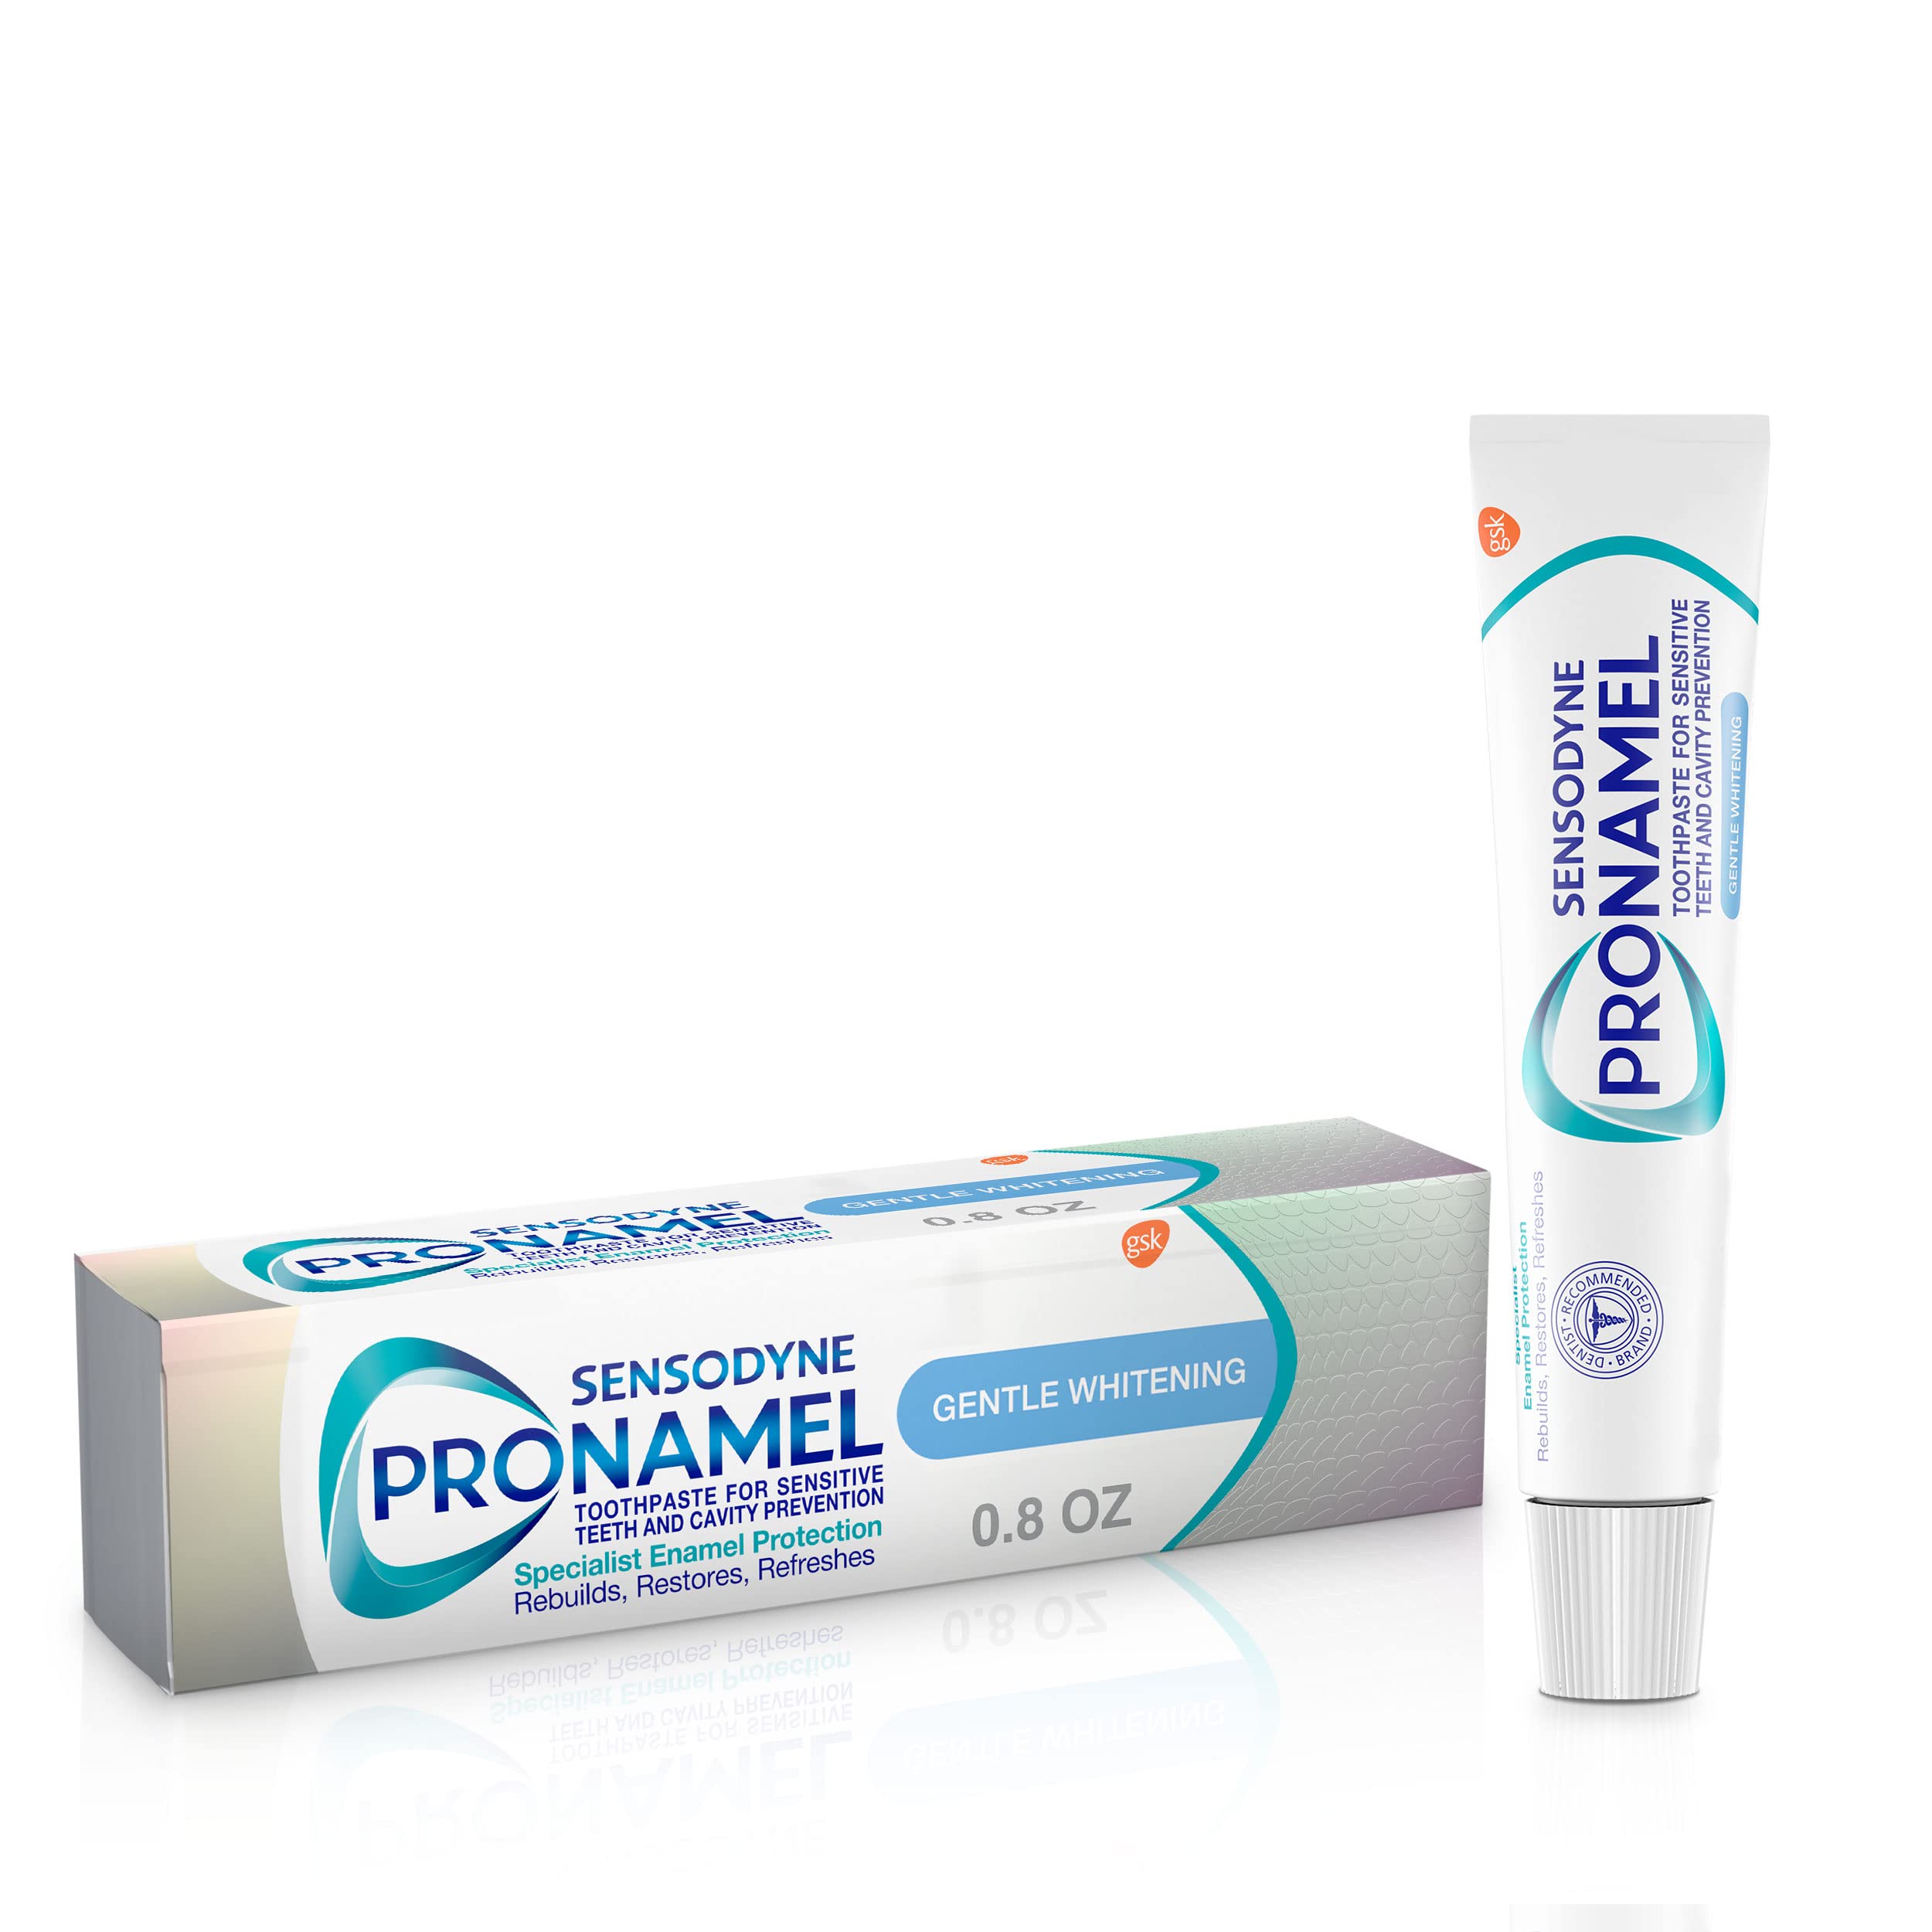 Sensodyne Pronamel Gentle Whitening Alpine Breeze Toothpaste - 0.8 ounce -Travel Size